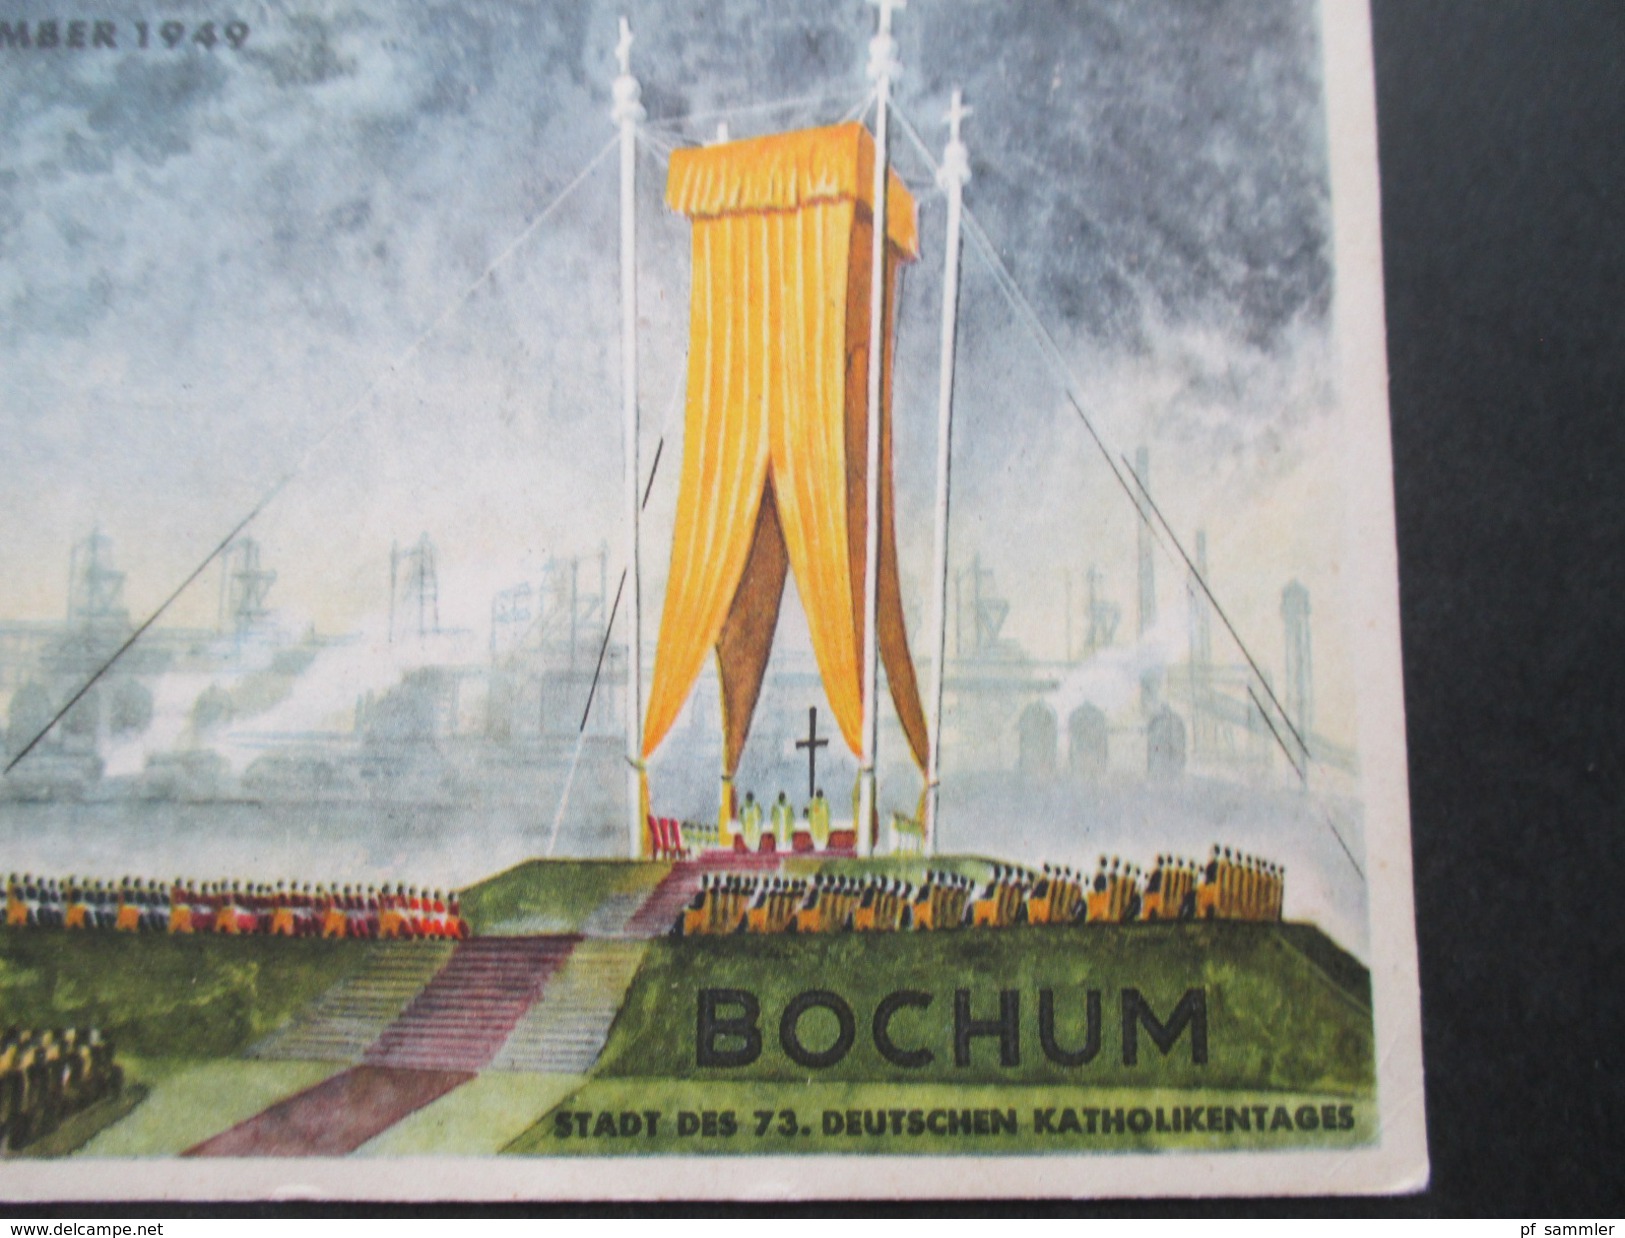 AK / Künstlerkarte Bochum Stadt Des 73. Deutschen Katholikentages. 1. - 4. September. 1949 Aquarell Kurt Hubert Vieth. - Christianisme